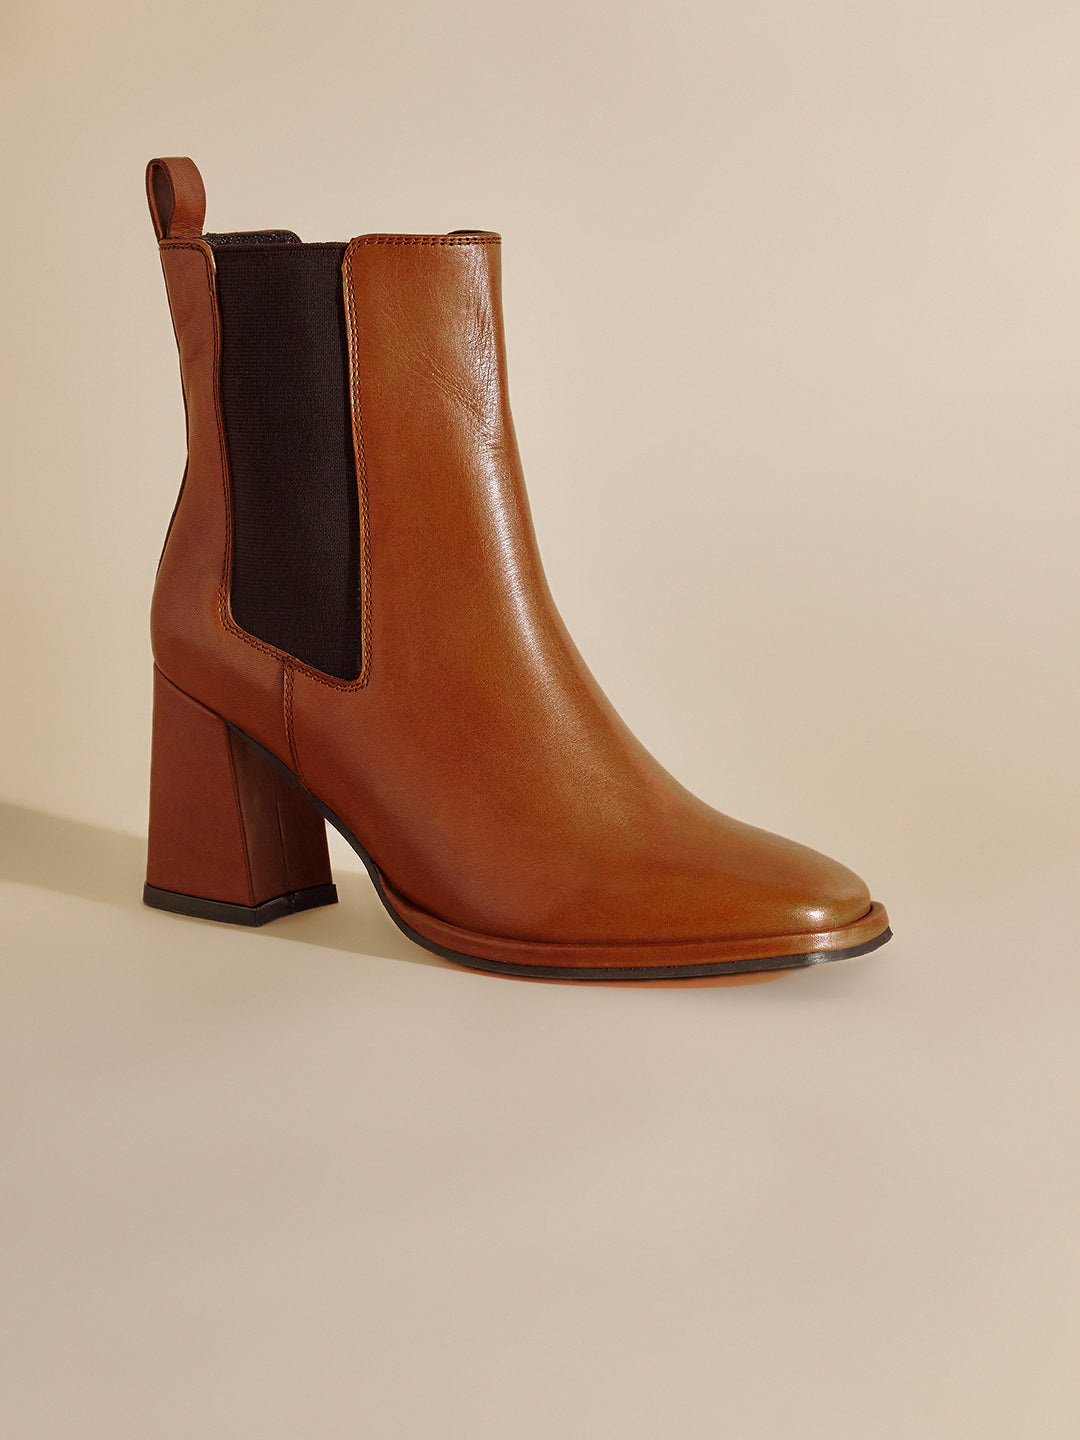 Zara | Shoes | Zara Tan Soft Leather High Heel Boots Size 37 | Poshmark